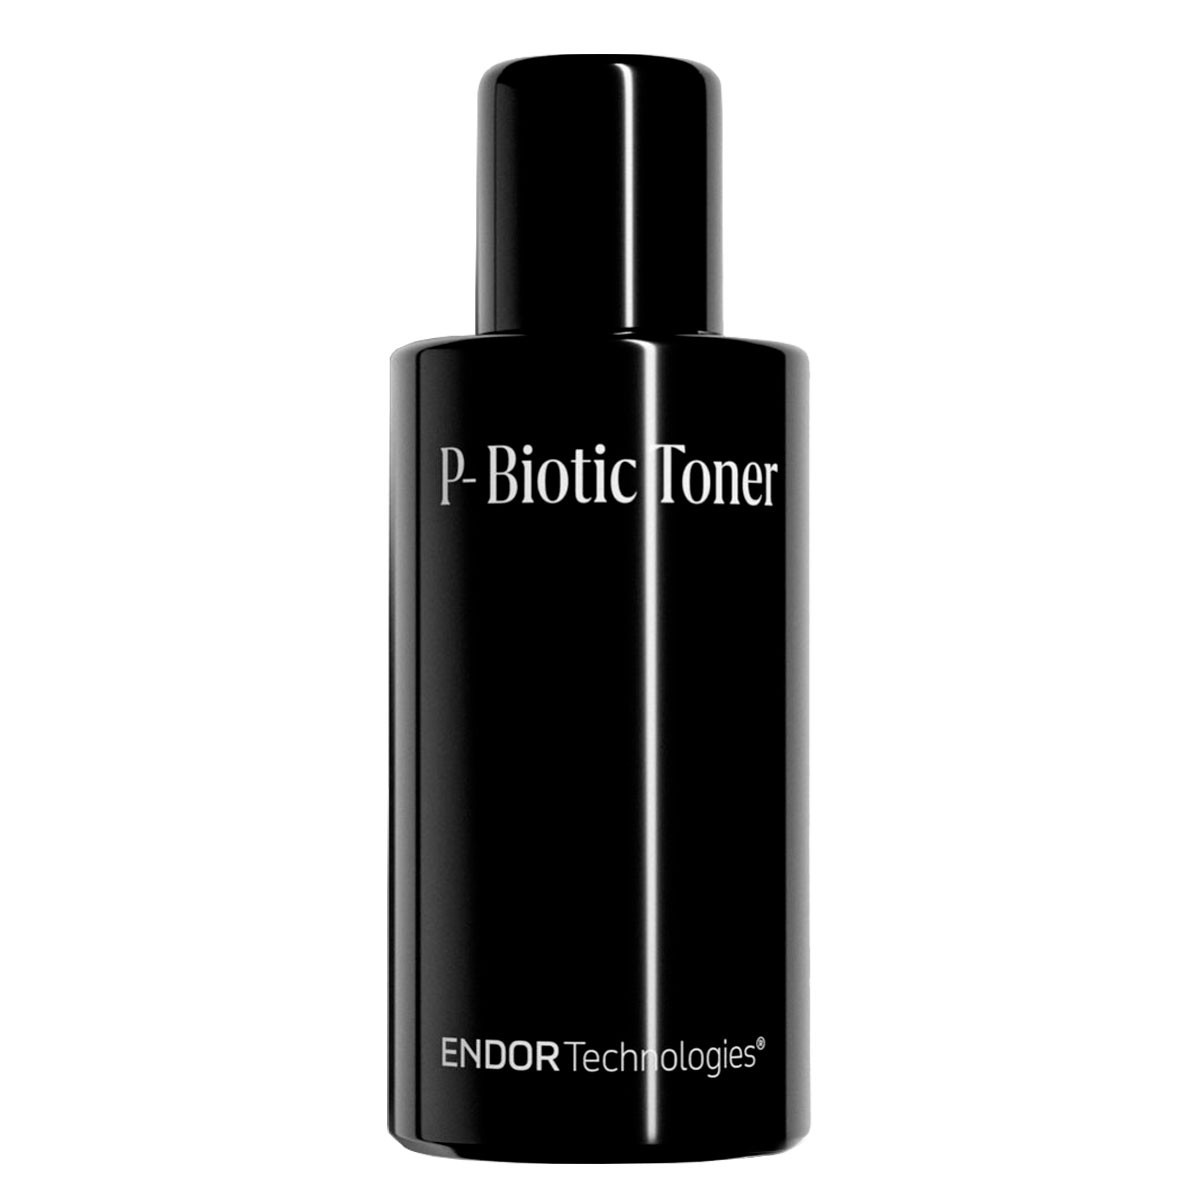 P-Biotic Toner Endor Technologies